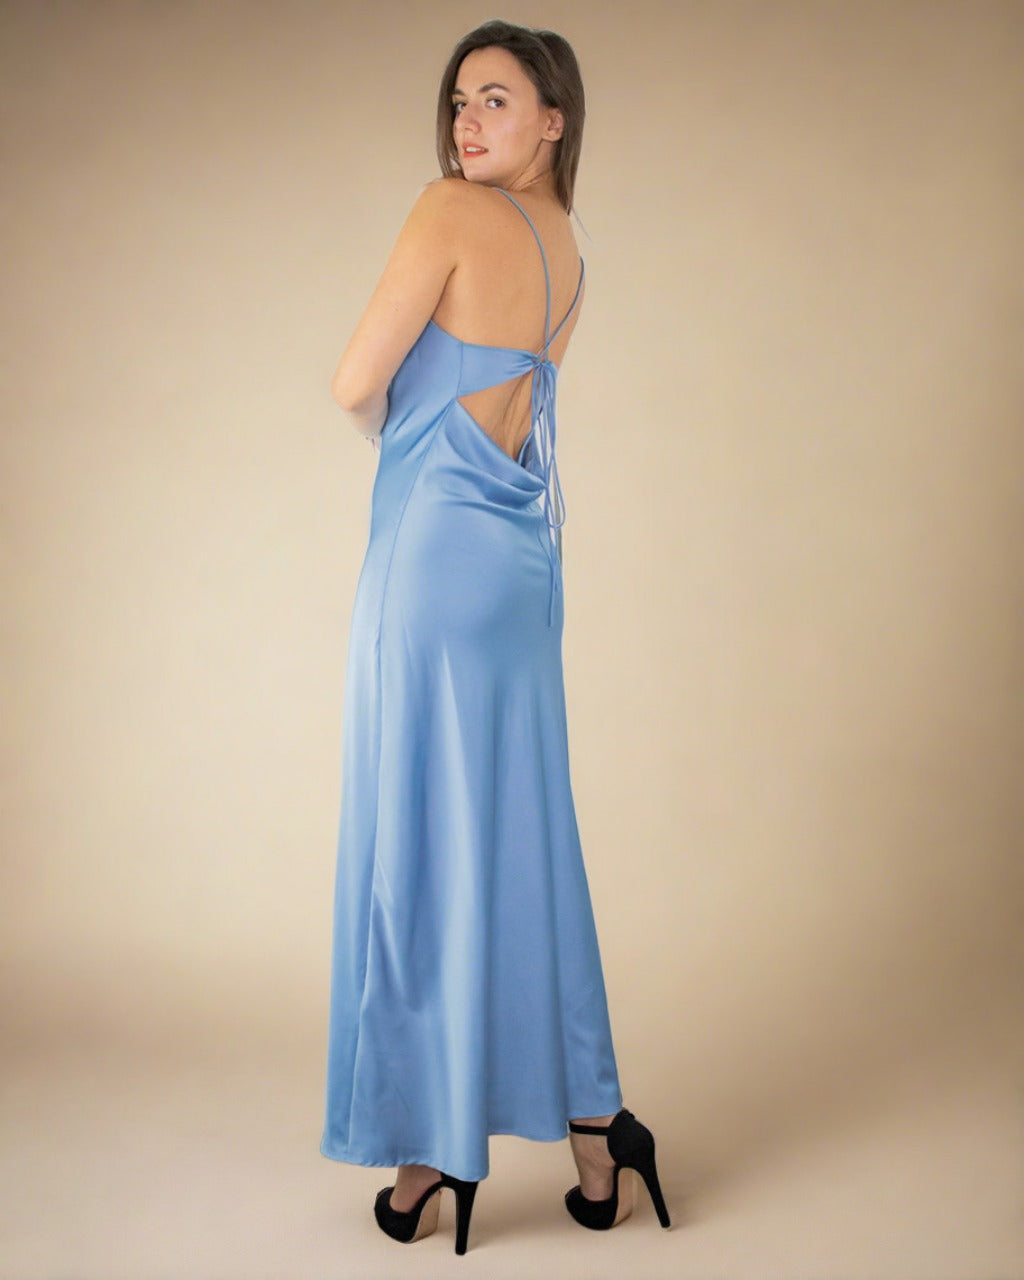 Davina Blue Satin Cowl Neck Dress - Long Satin Slip Dress